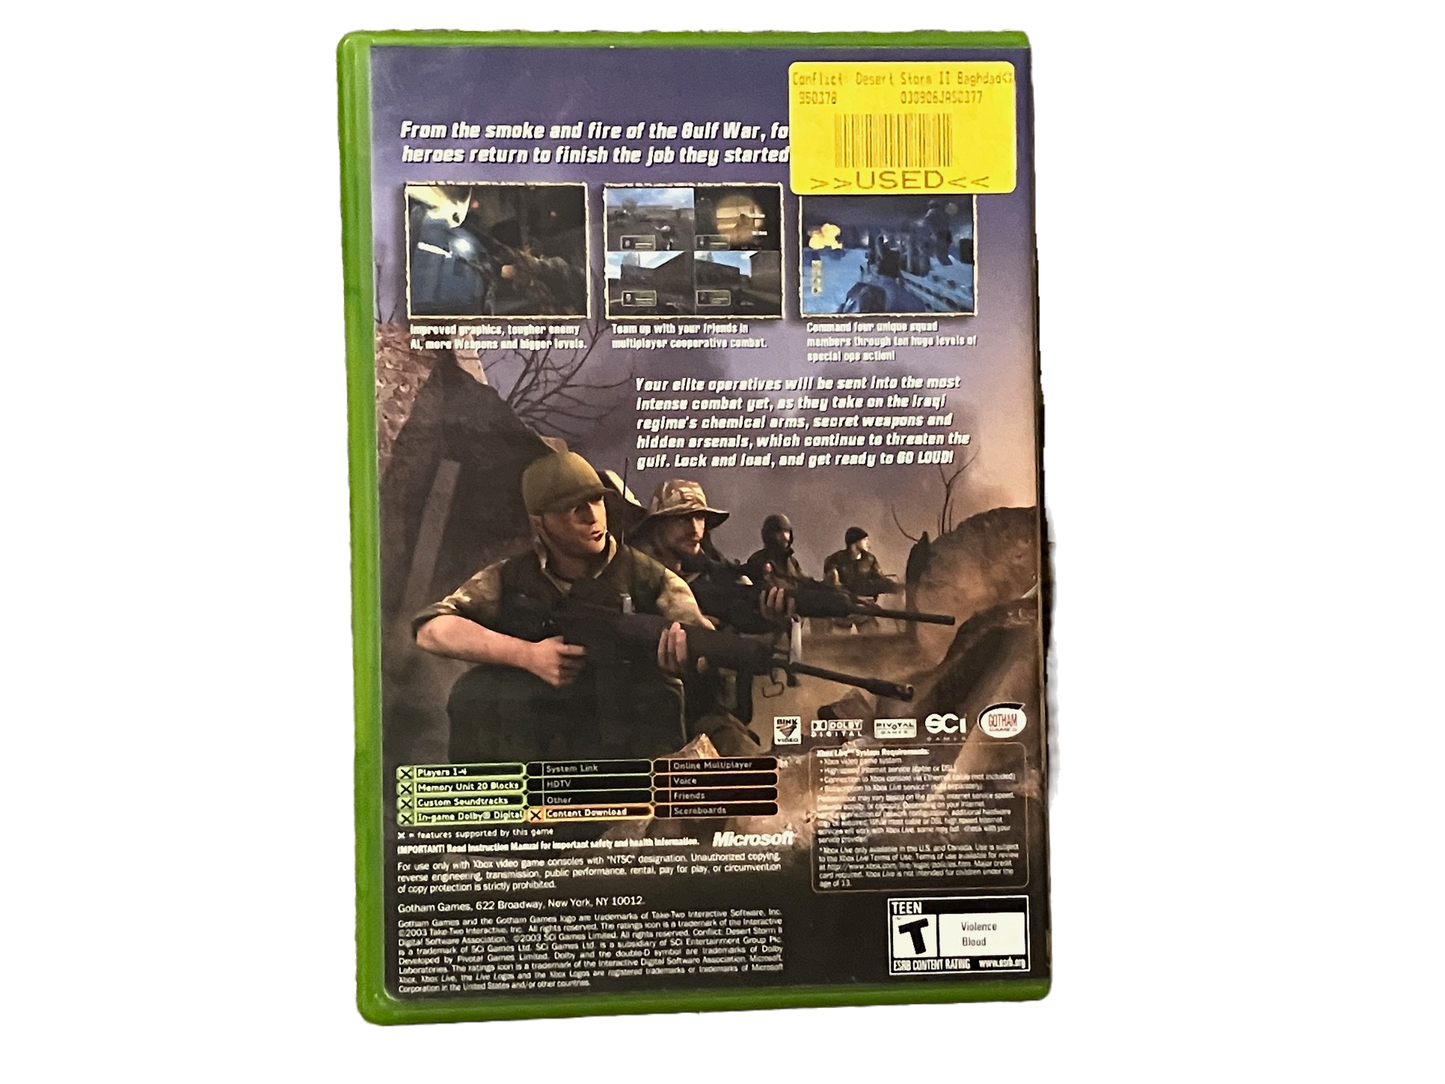 Conflict Desert Storm II Back To Baghdad Original Xbox Complete